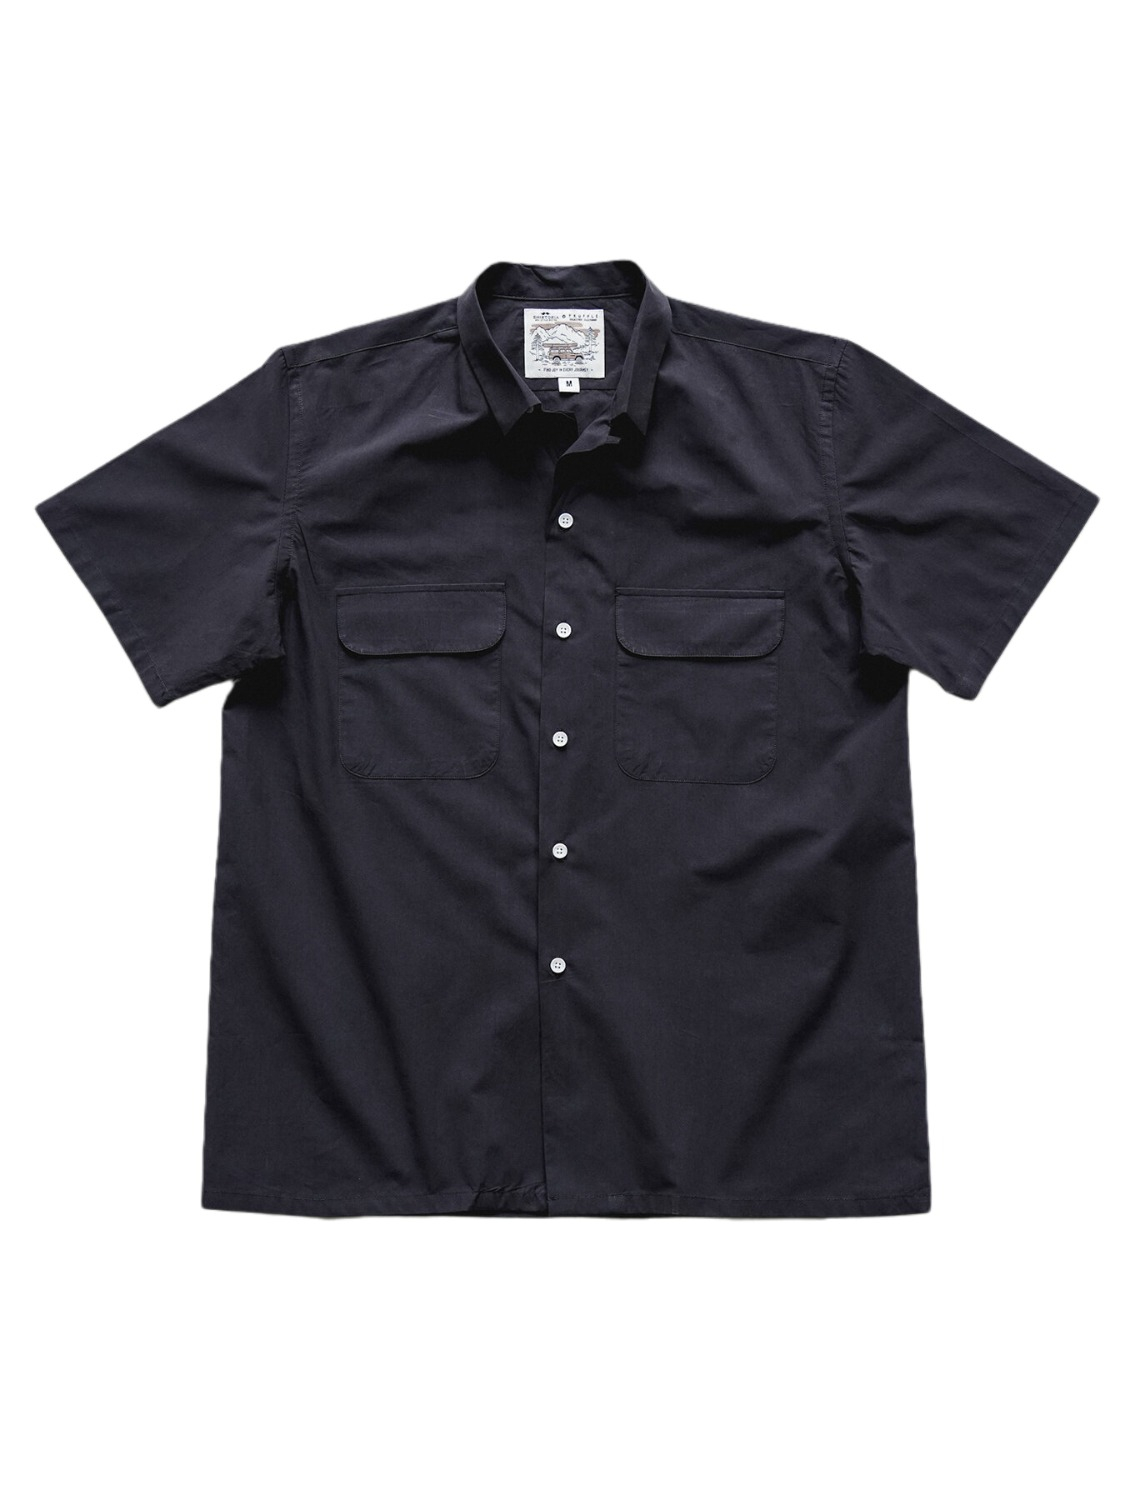 Cotton Shirt (Black)